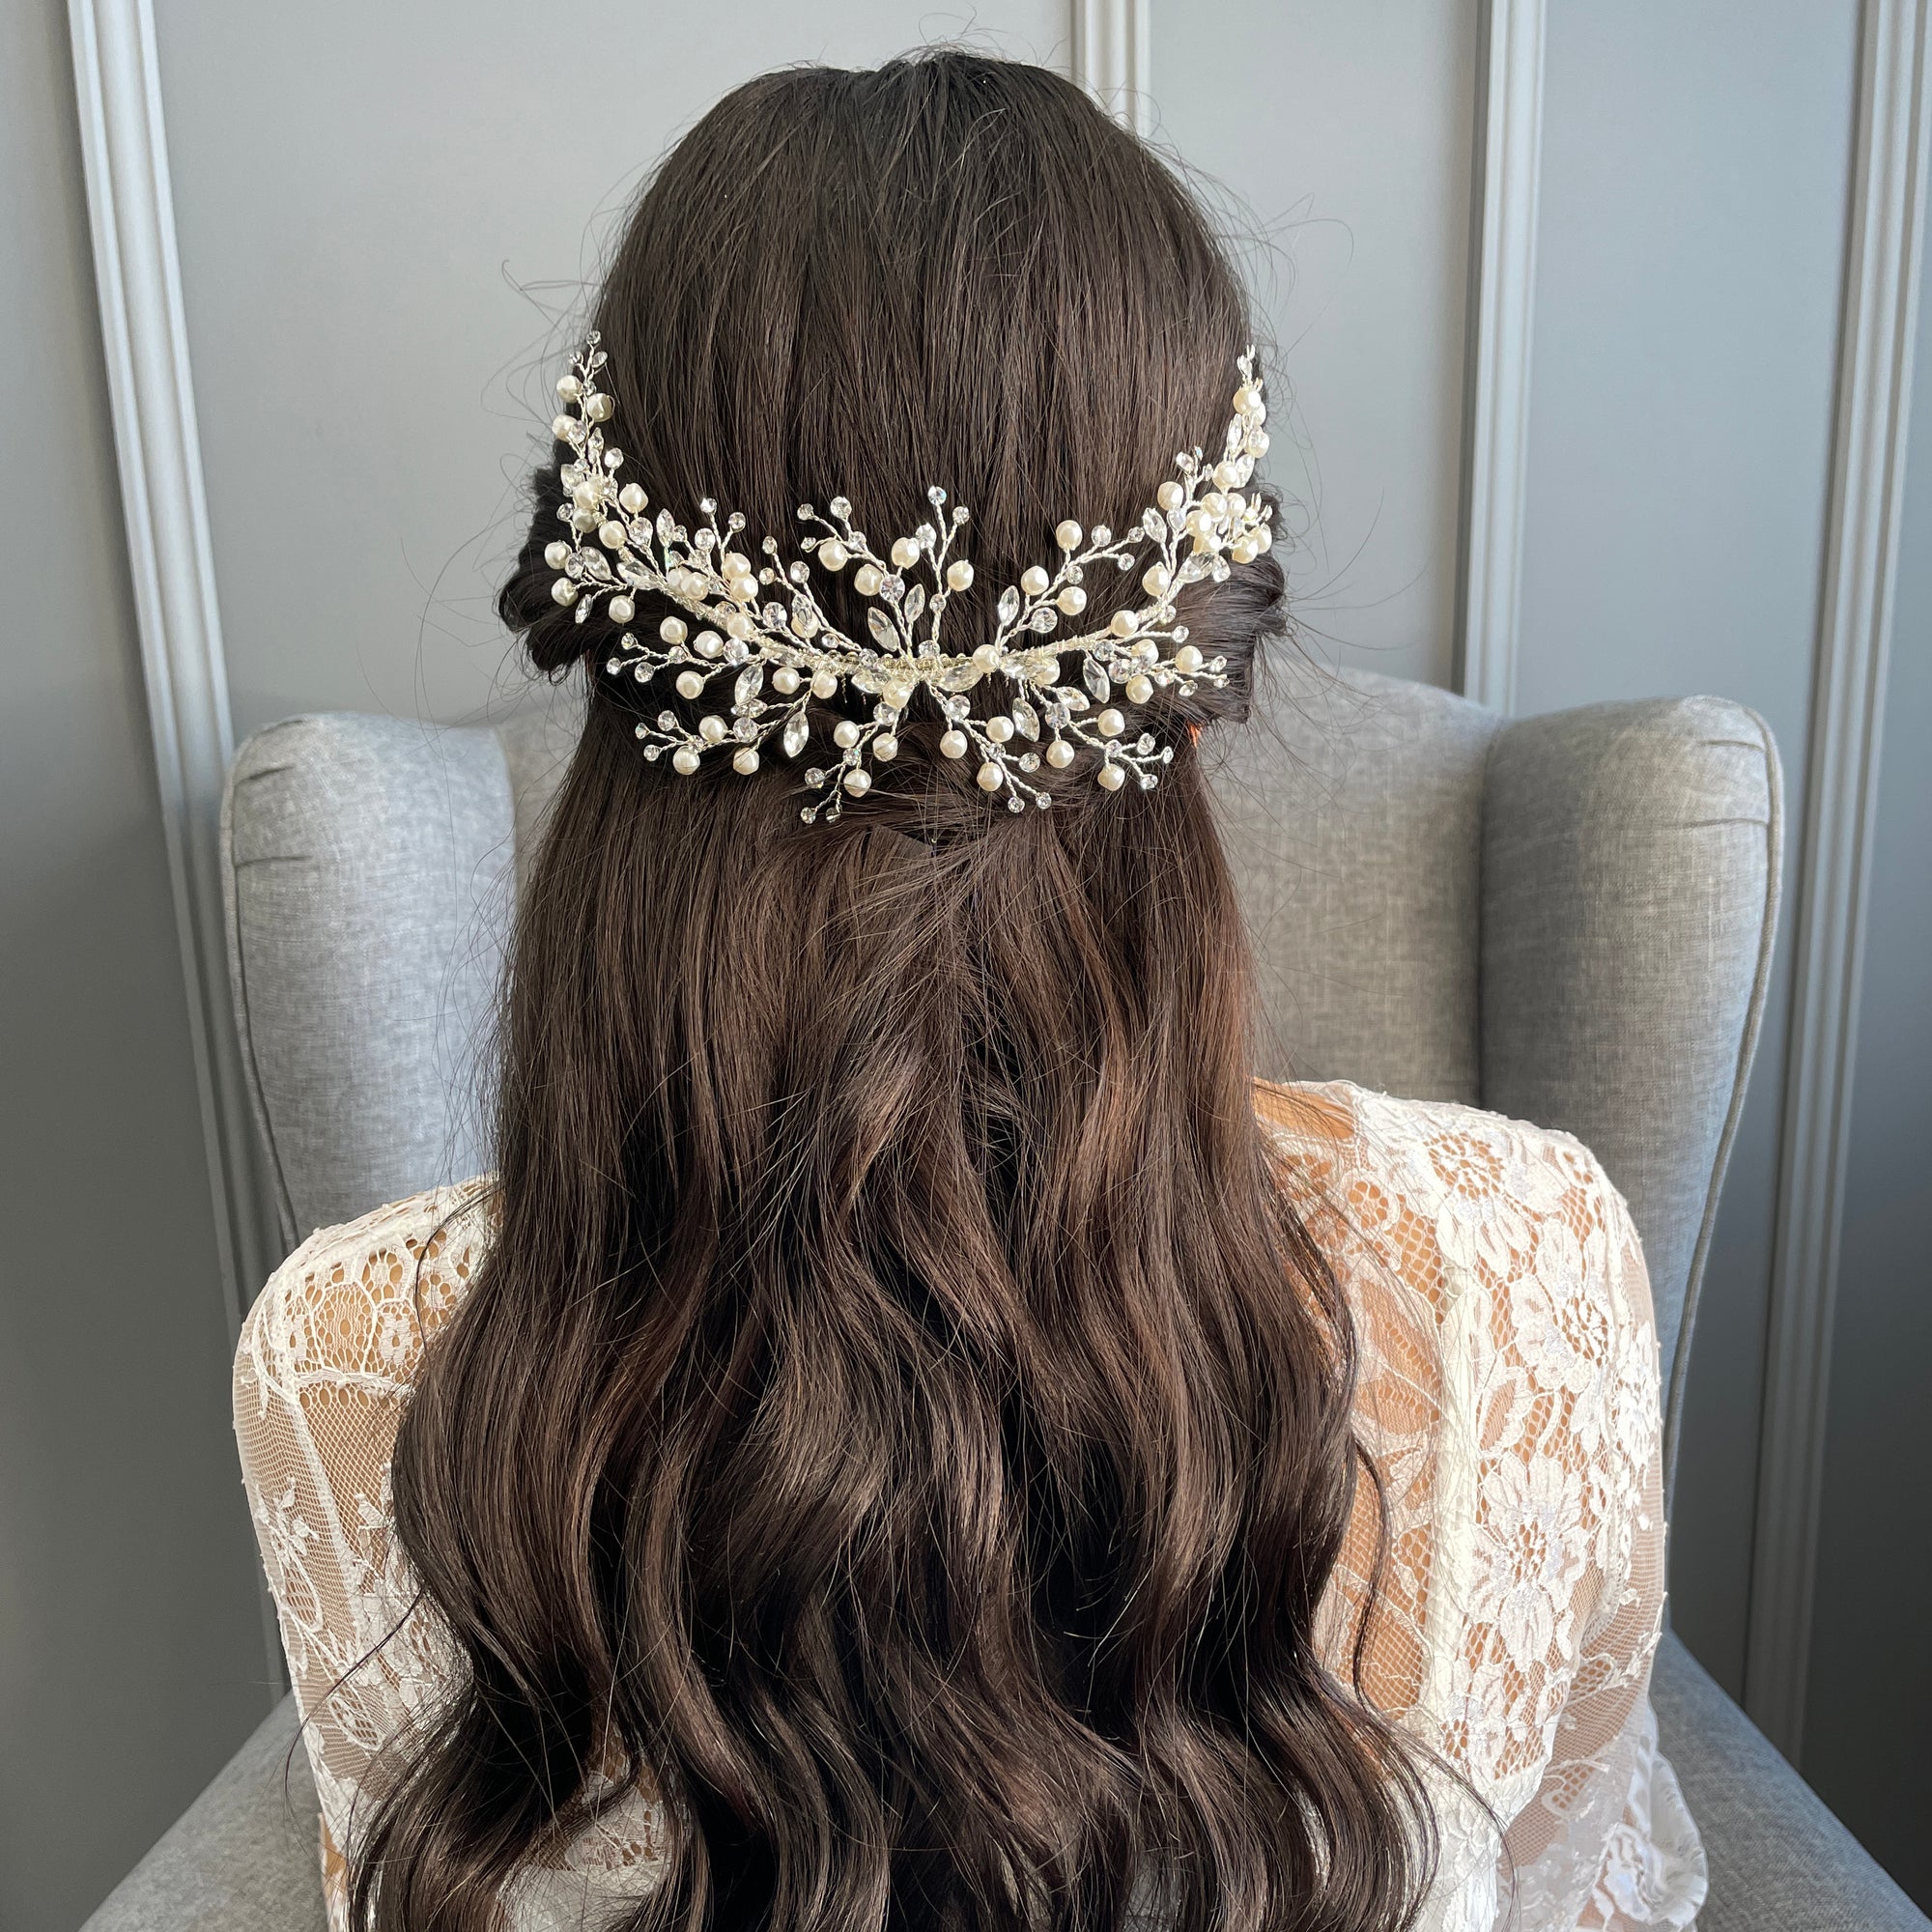 Delicate bridal hair pins for the modern bride - TANIA MARAS